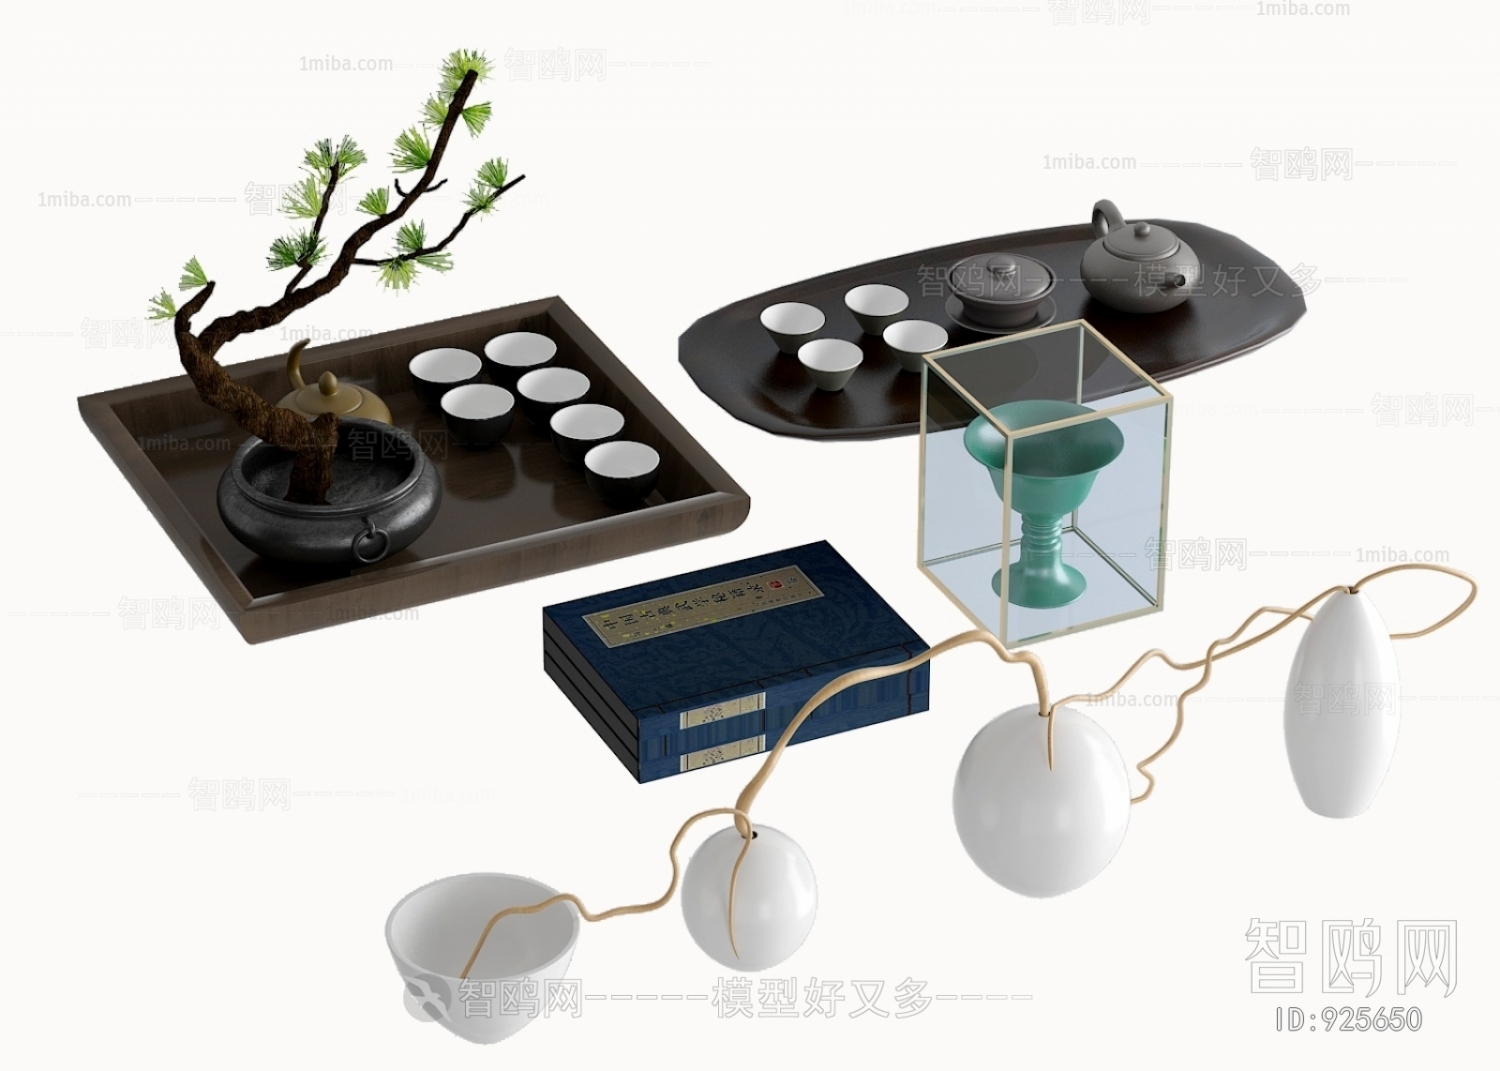 New Chinese Style Tea Set